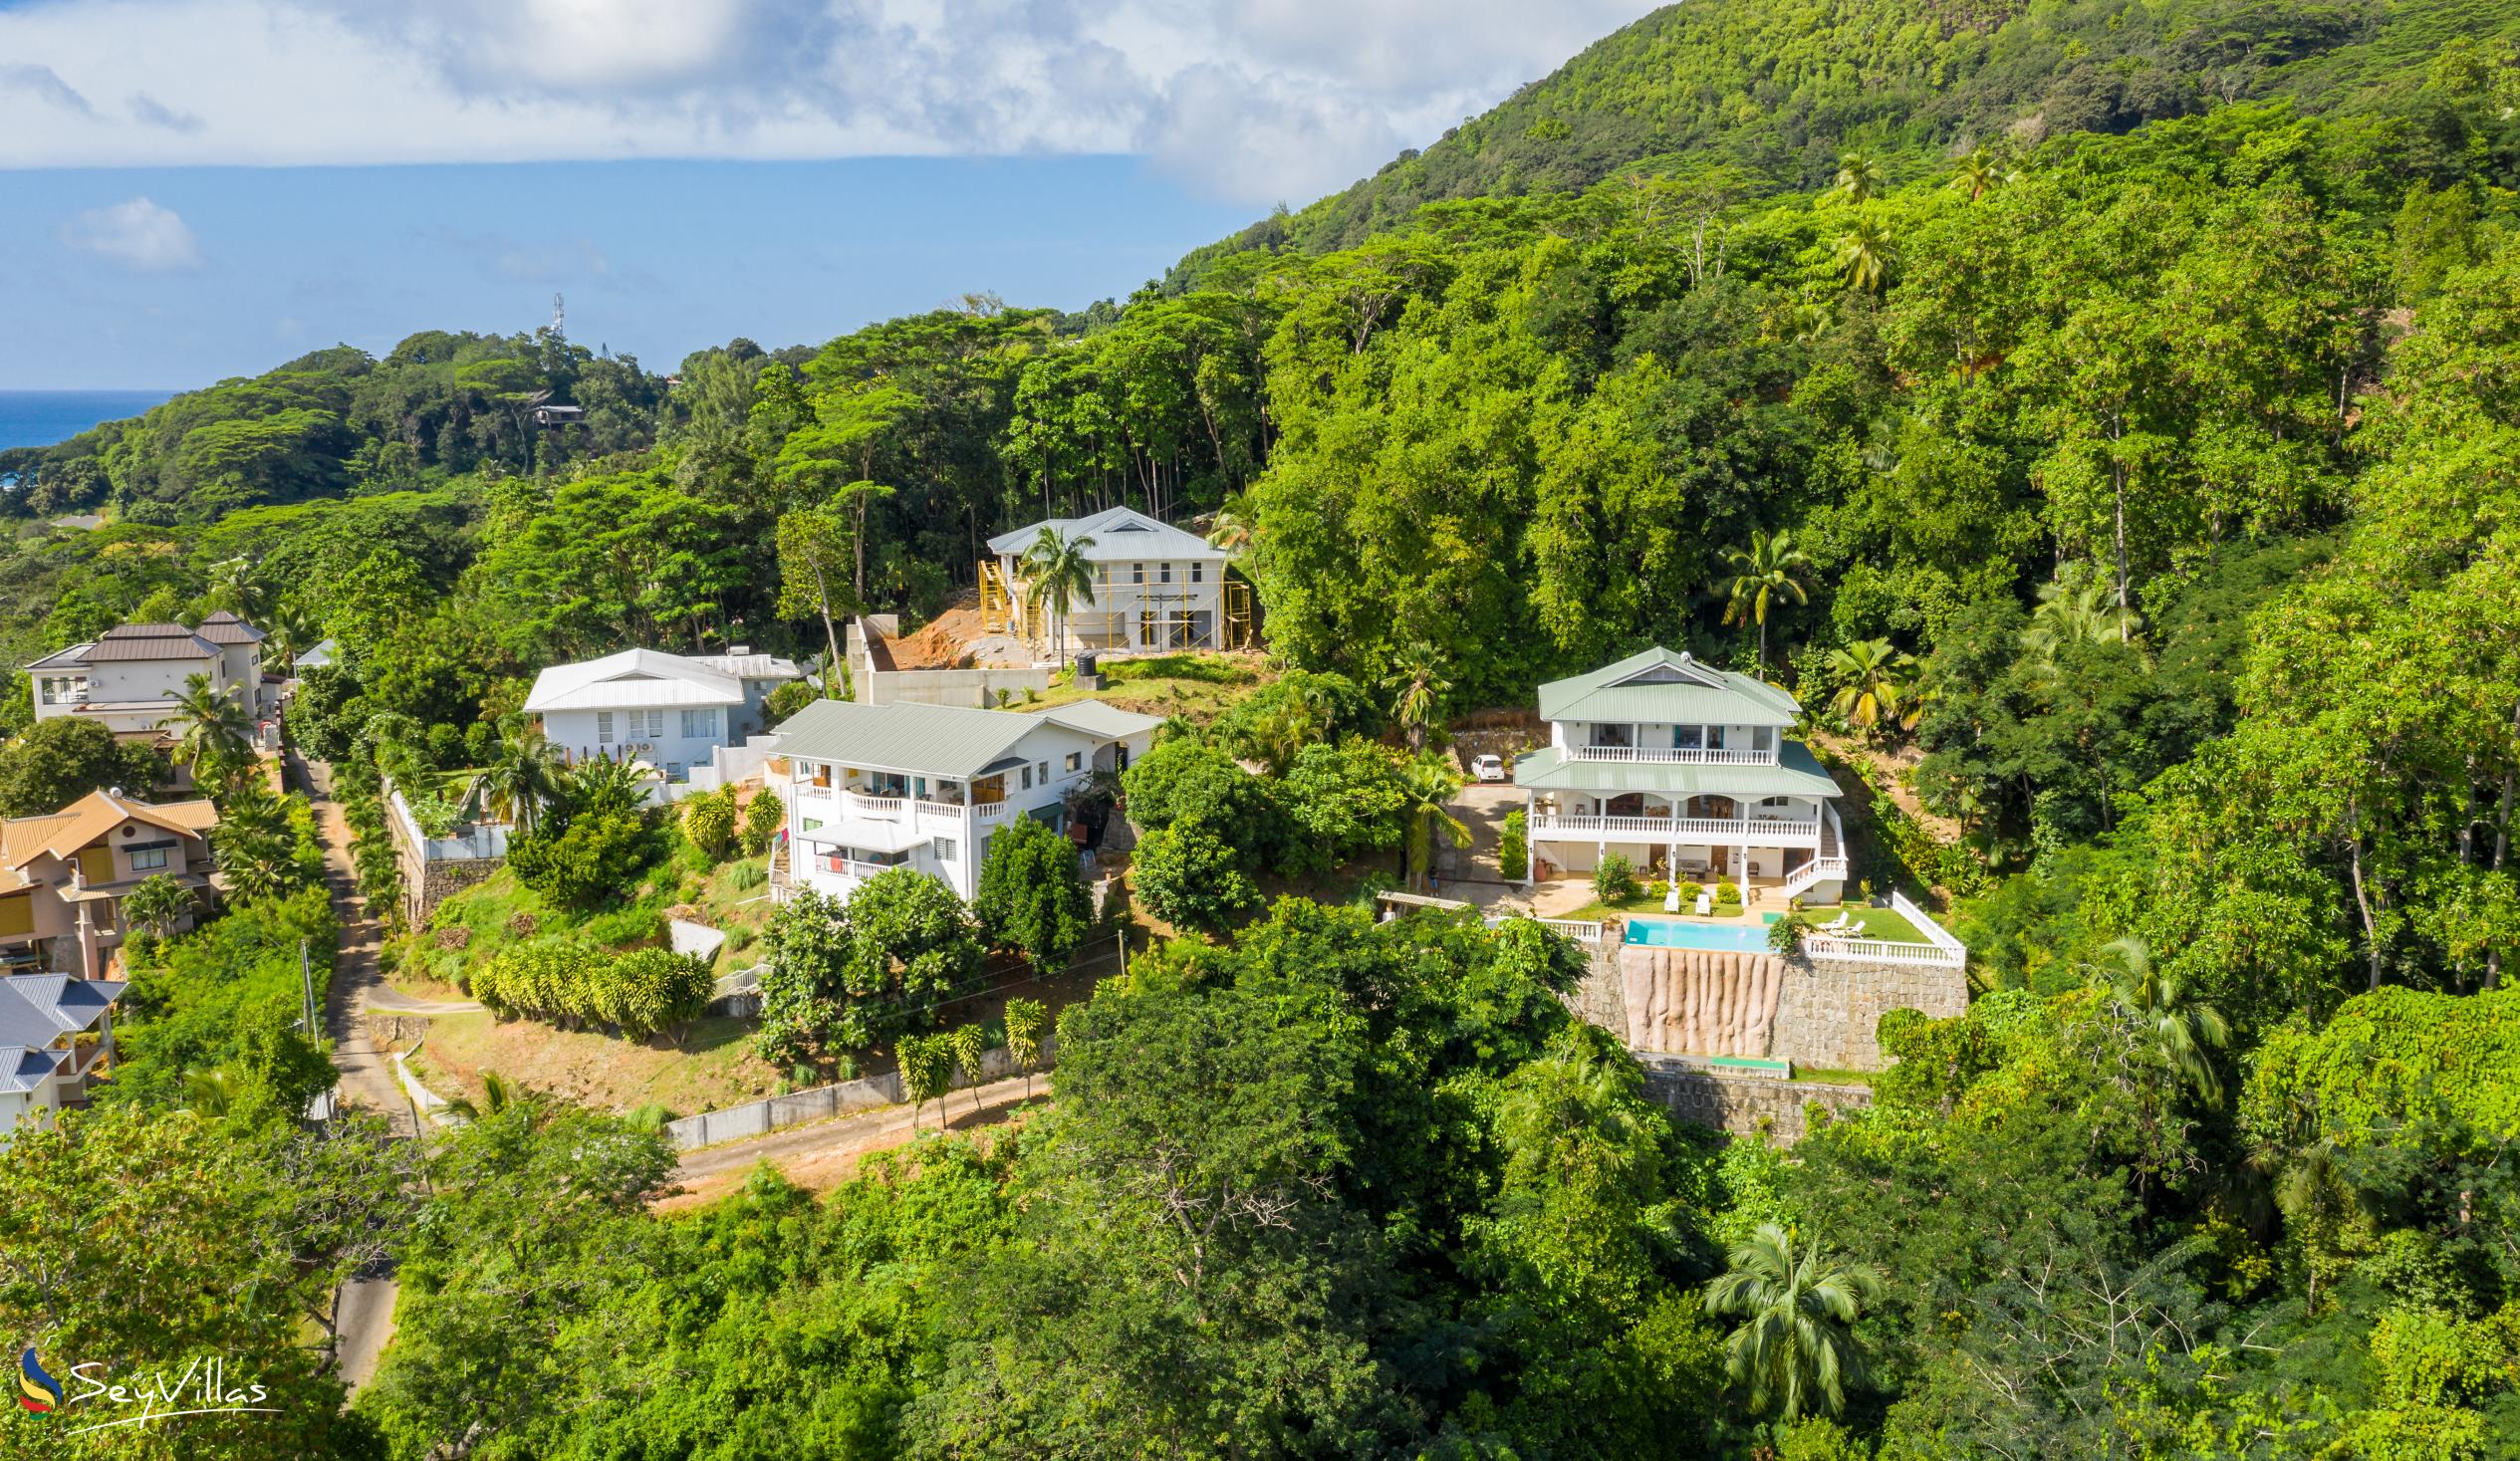 Foto 15: Villa Karibu - Posizione - Mahé (Seychelles)